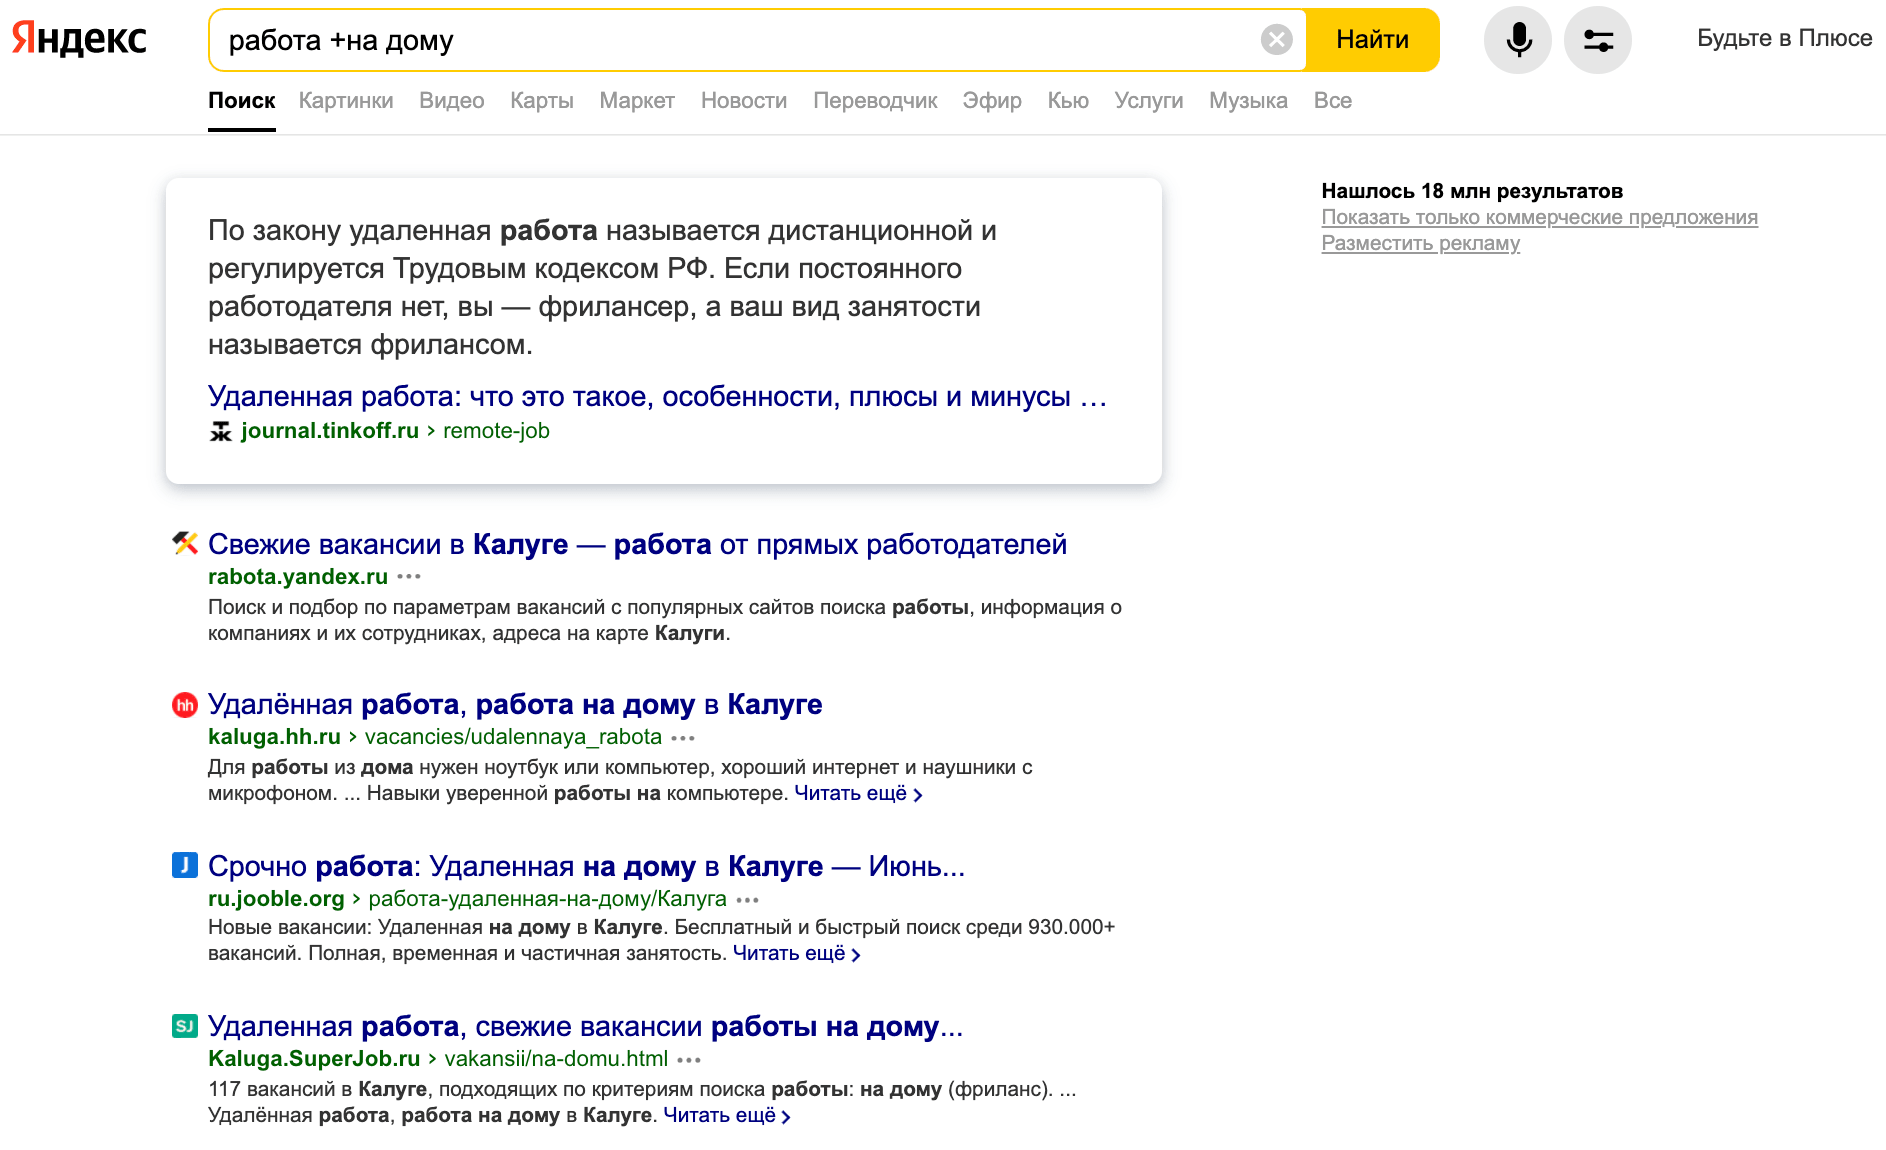 Пример выдачи с оператором Яндекса «+»